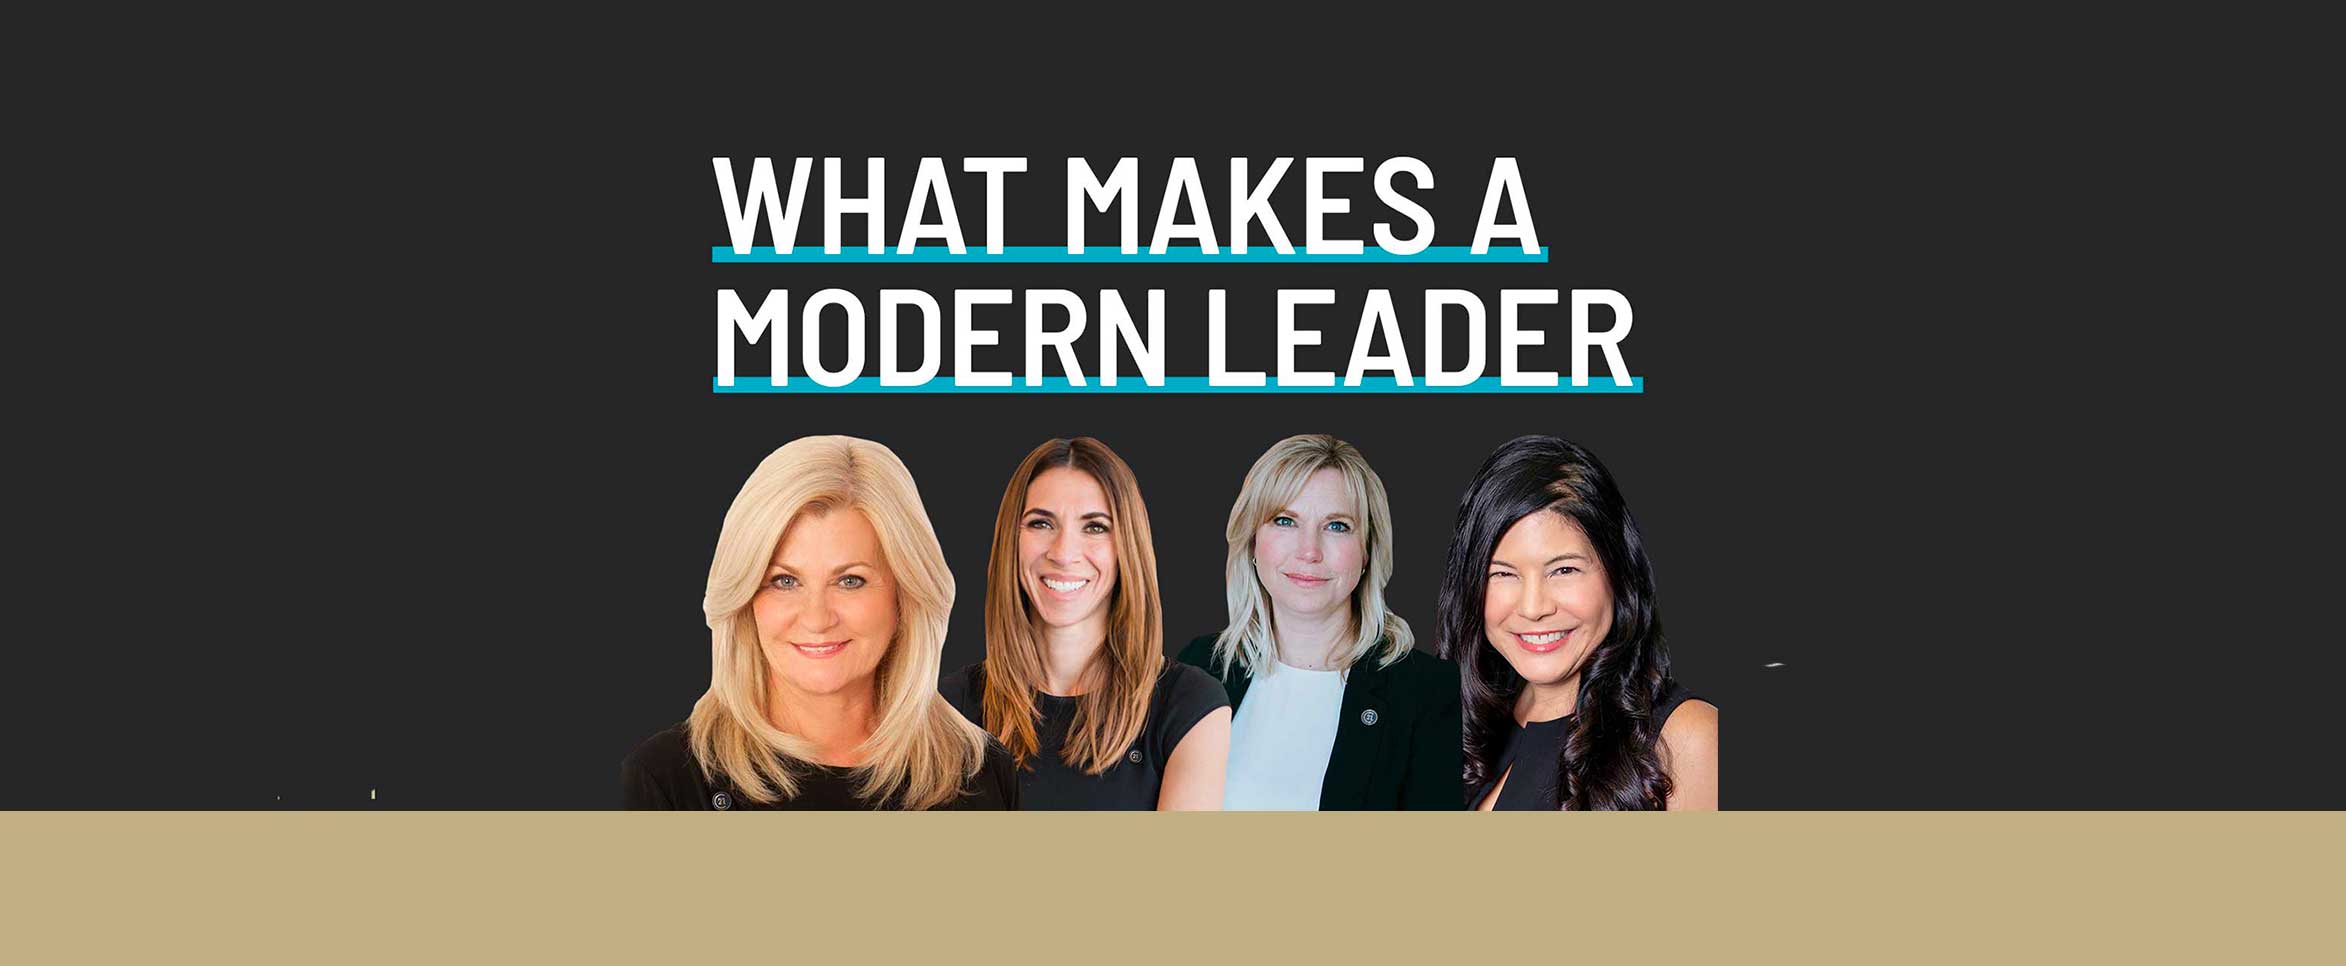 What makes a modern leader